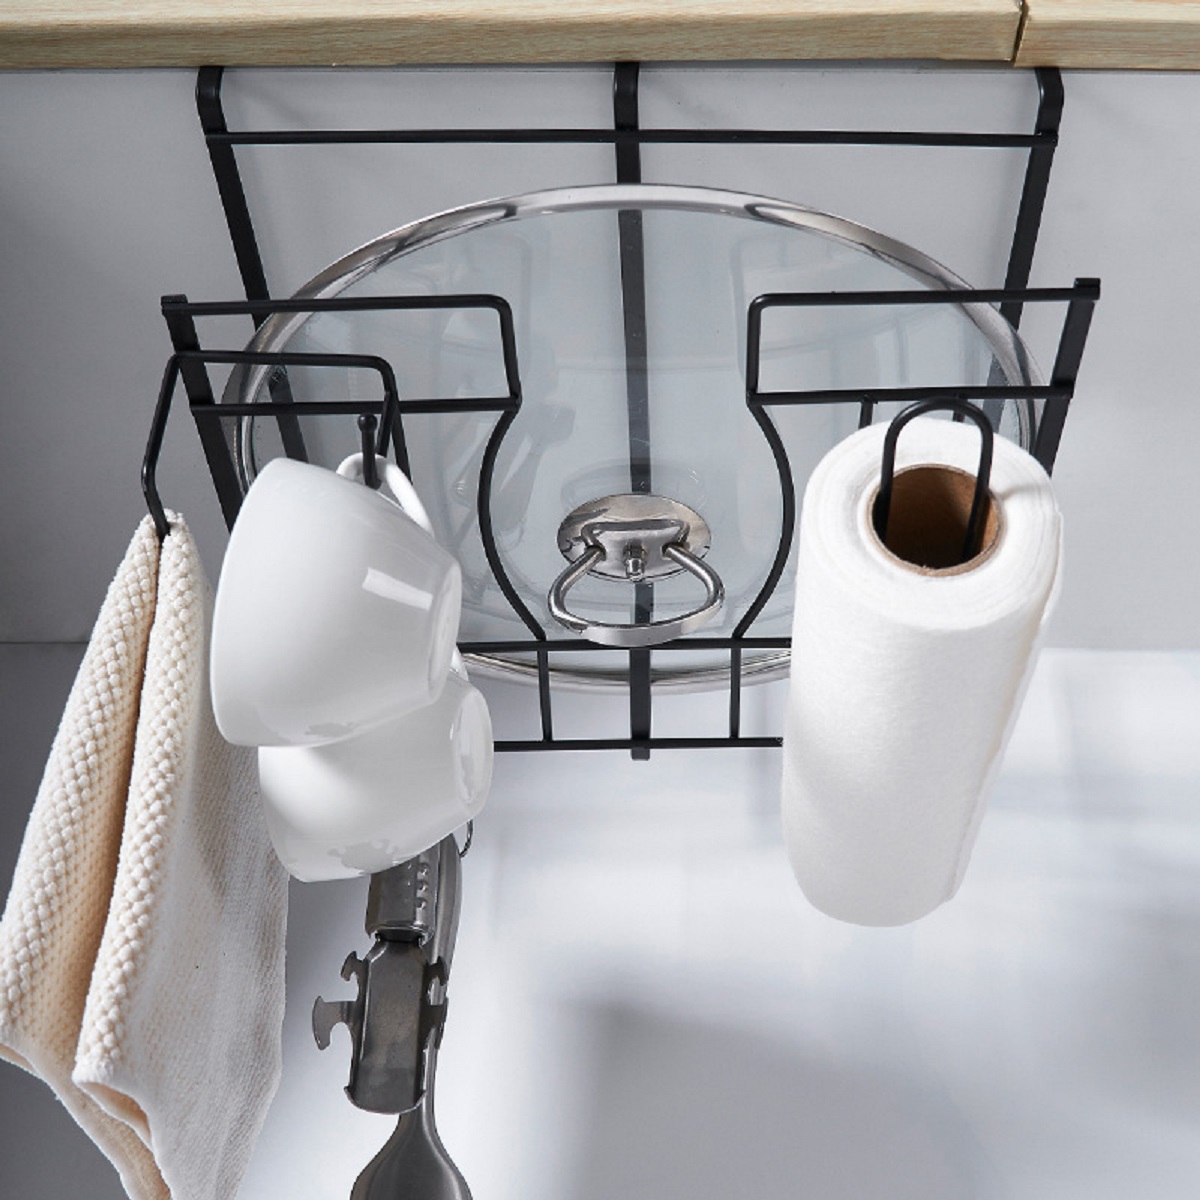 Metal-Hanging-Basket-Iron-BlackWhite-Hook-Design-Wall-Hanging-Rack-Kitchen-Bathroom-Towel-Knife-Stor-1776553-9